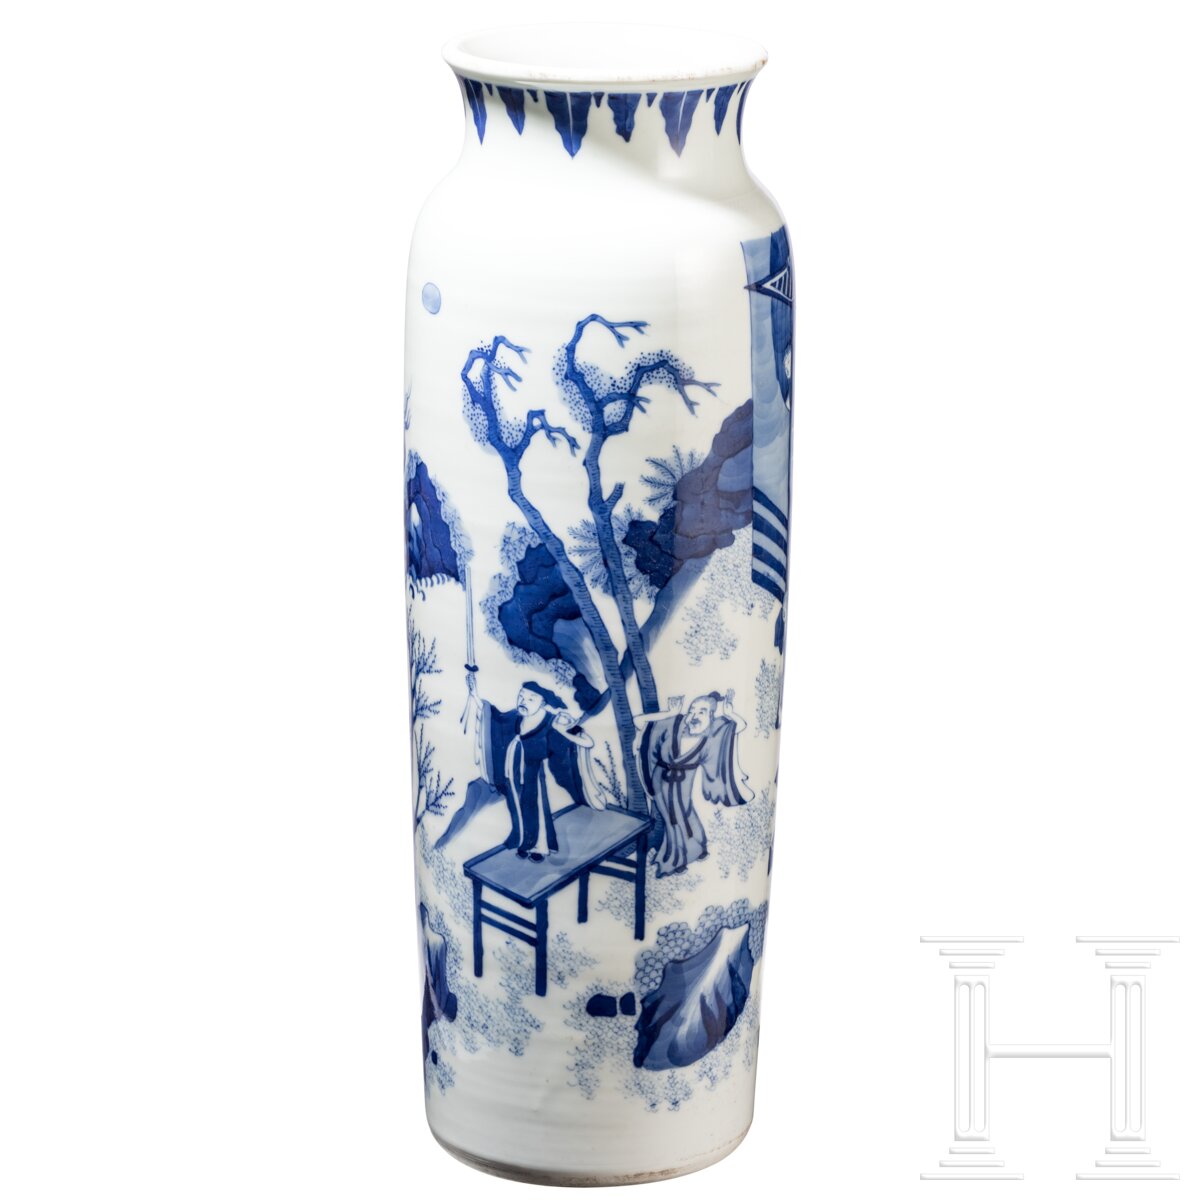 Große blaue-weiße Vase mit Soldatenszene, China, wohl Kangxi-Periode (18. Jhdt.) - Image 2 of 20